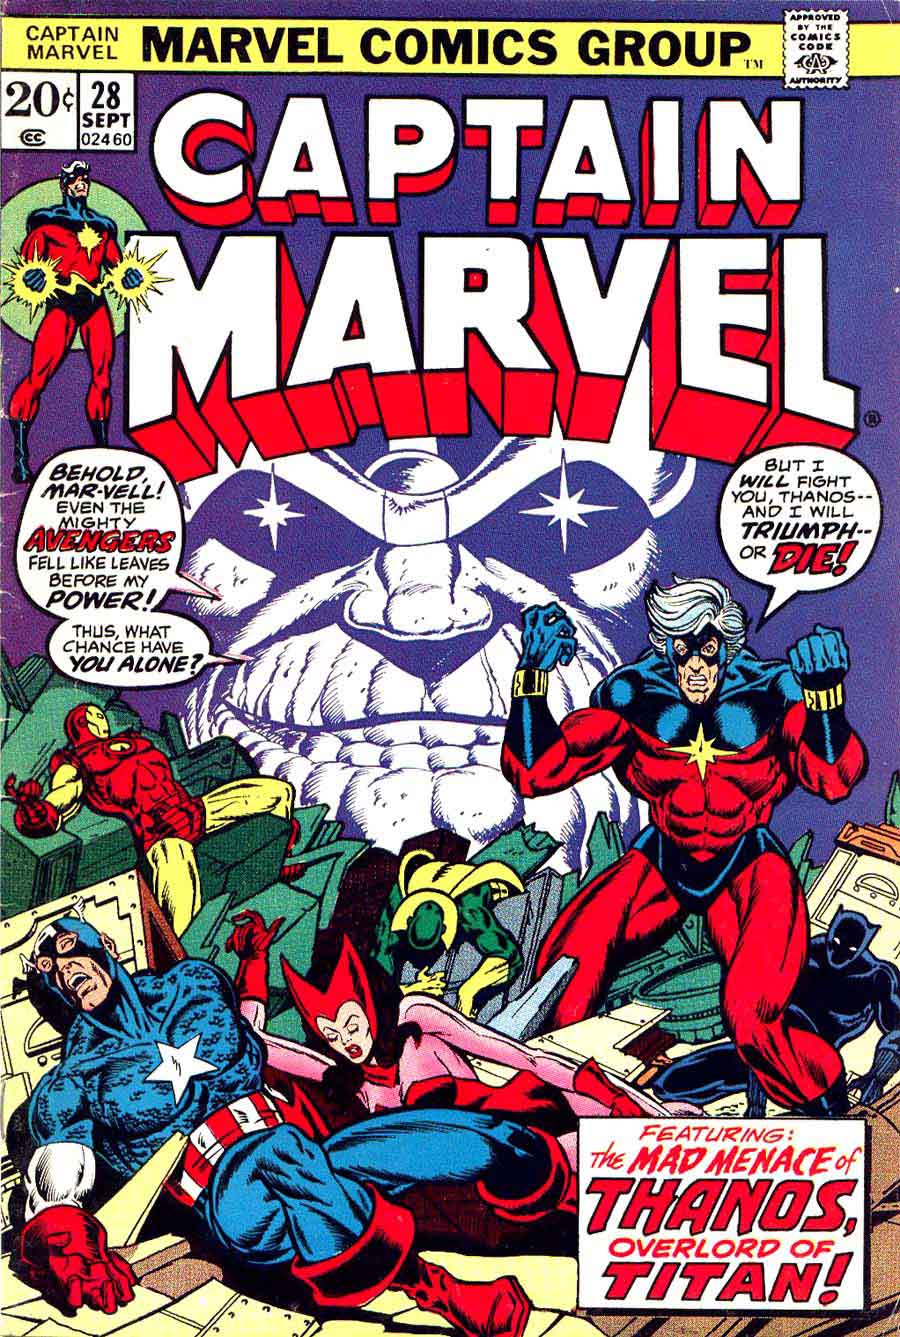 Captain Marvel #28 marvel 1970s bronze age comic book cover art by Jim Starlin